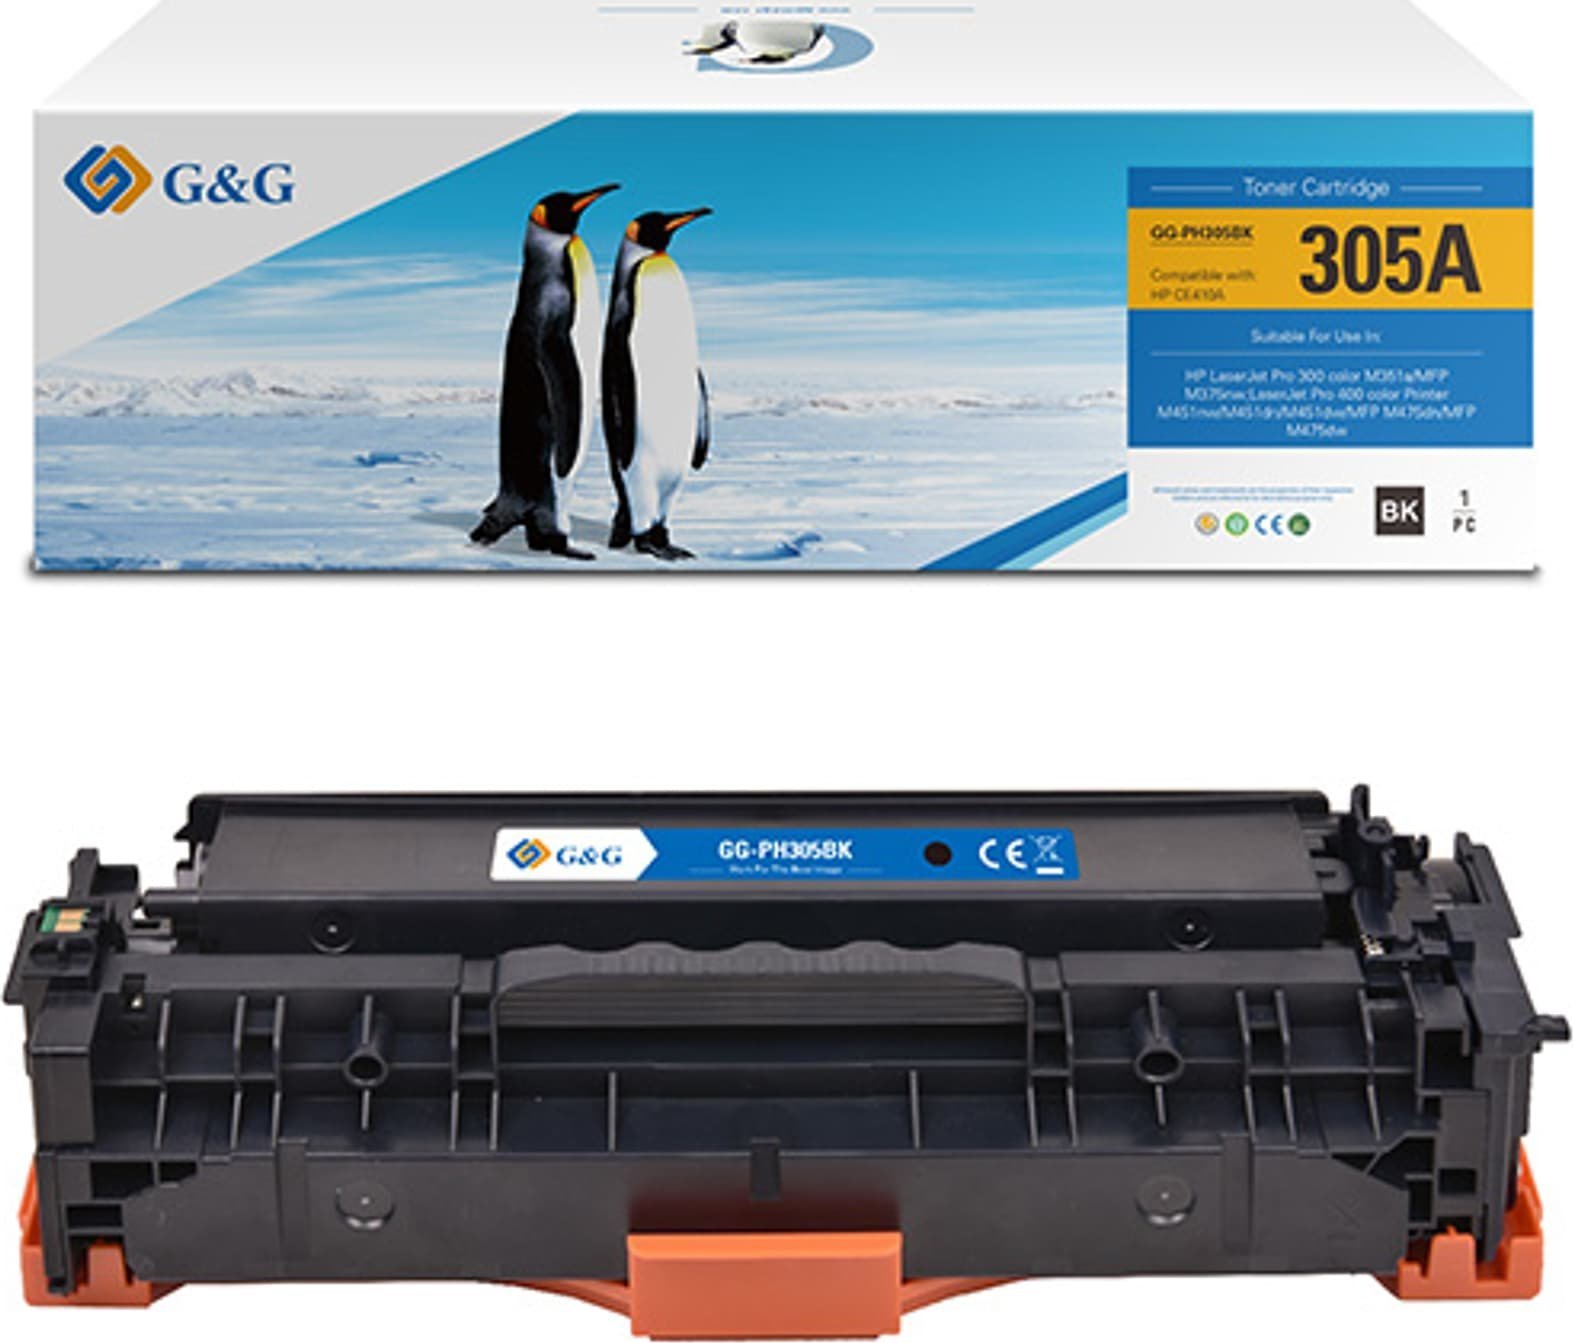 G&G Toner compatibil G&G pentru CE410A, negru, 2090s, NT-PH305BK(CE410A), HP 305A, pentru HP LaserJet Pro 400 M451dn, M451nw, N